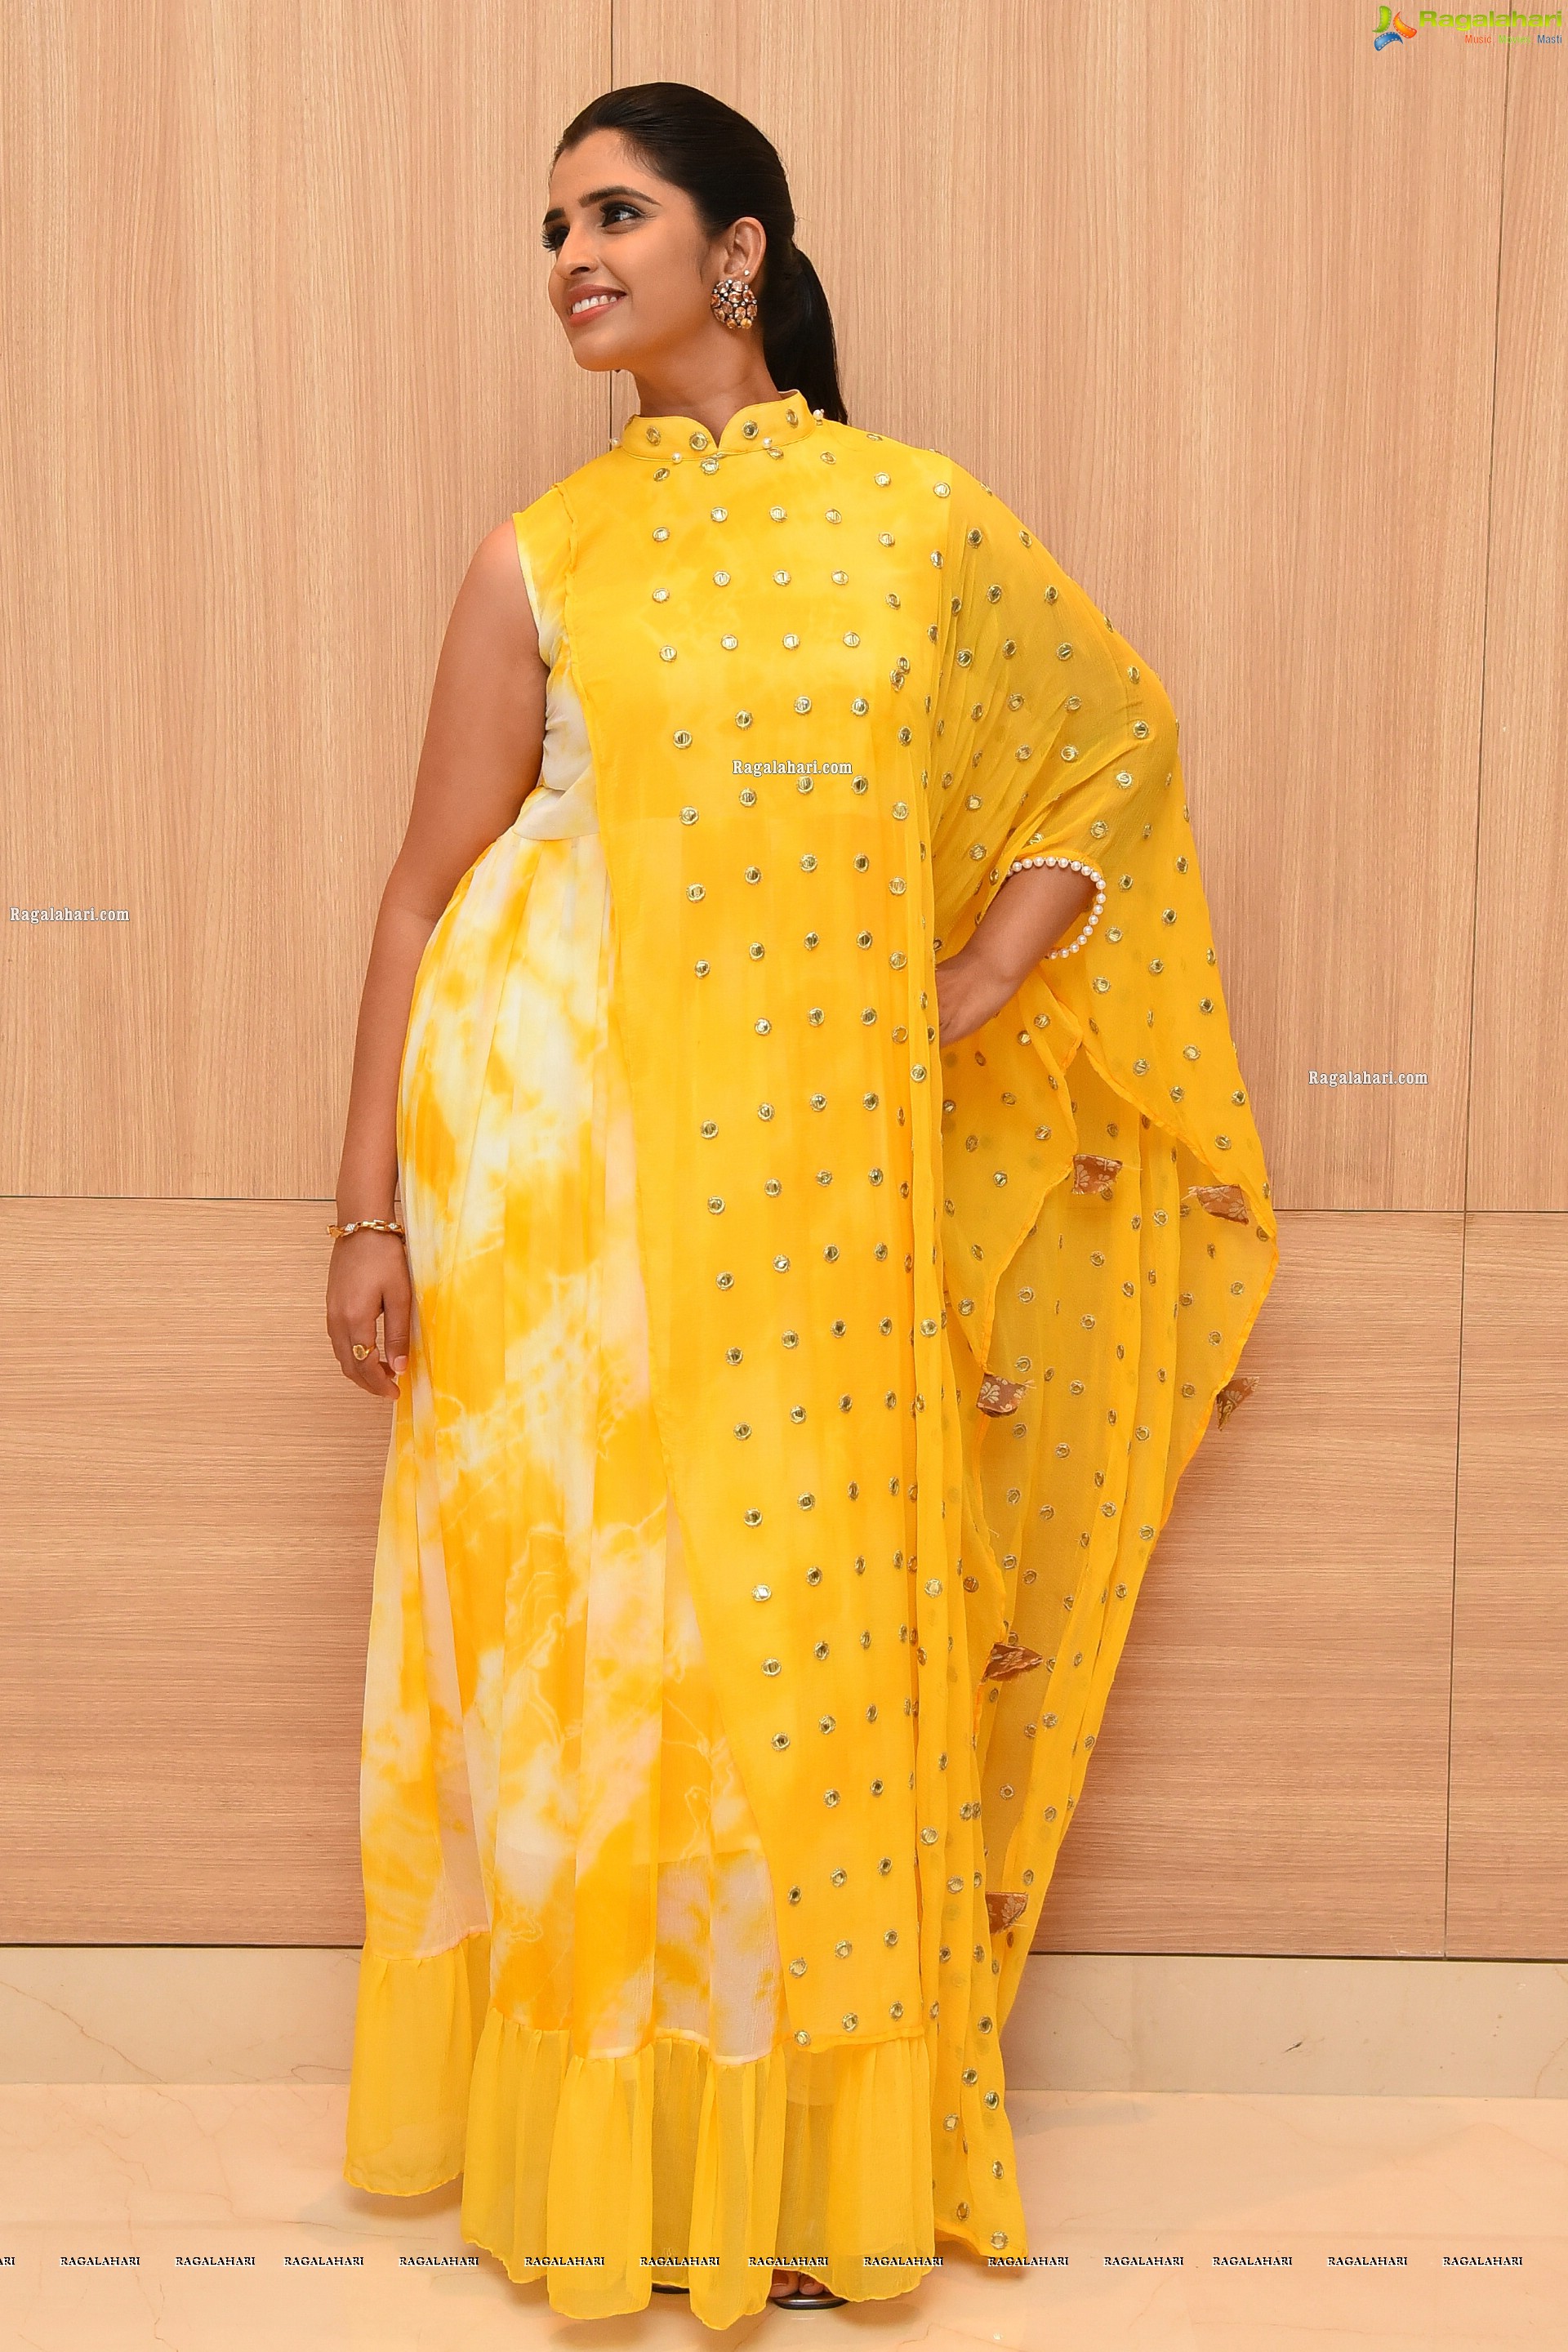 Anchor Shyamala in Yellow Dress, HD Photo Gallery